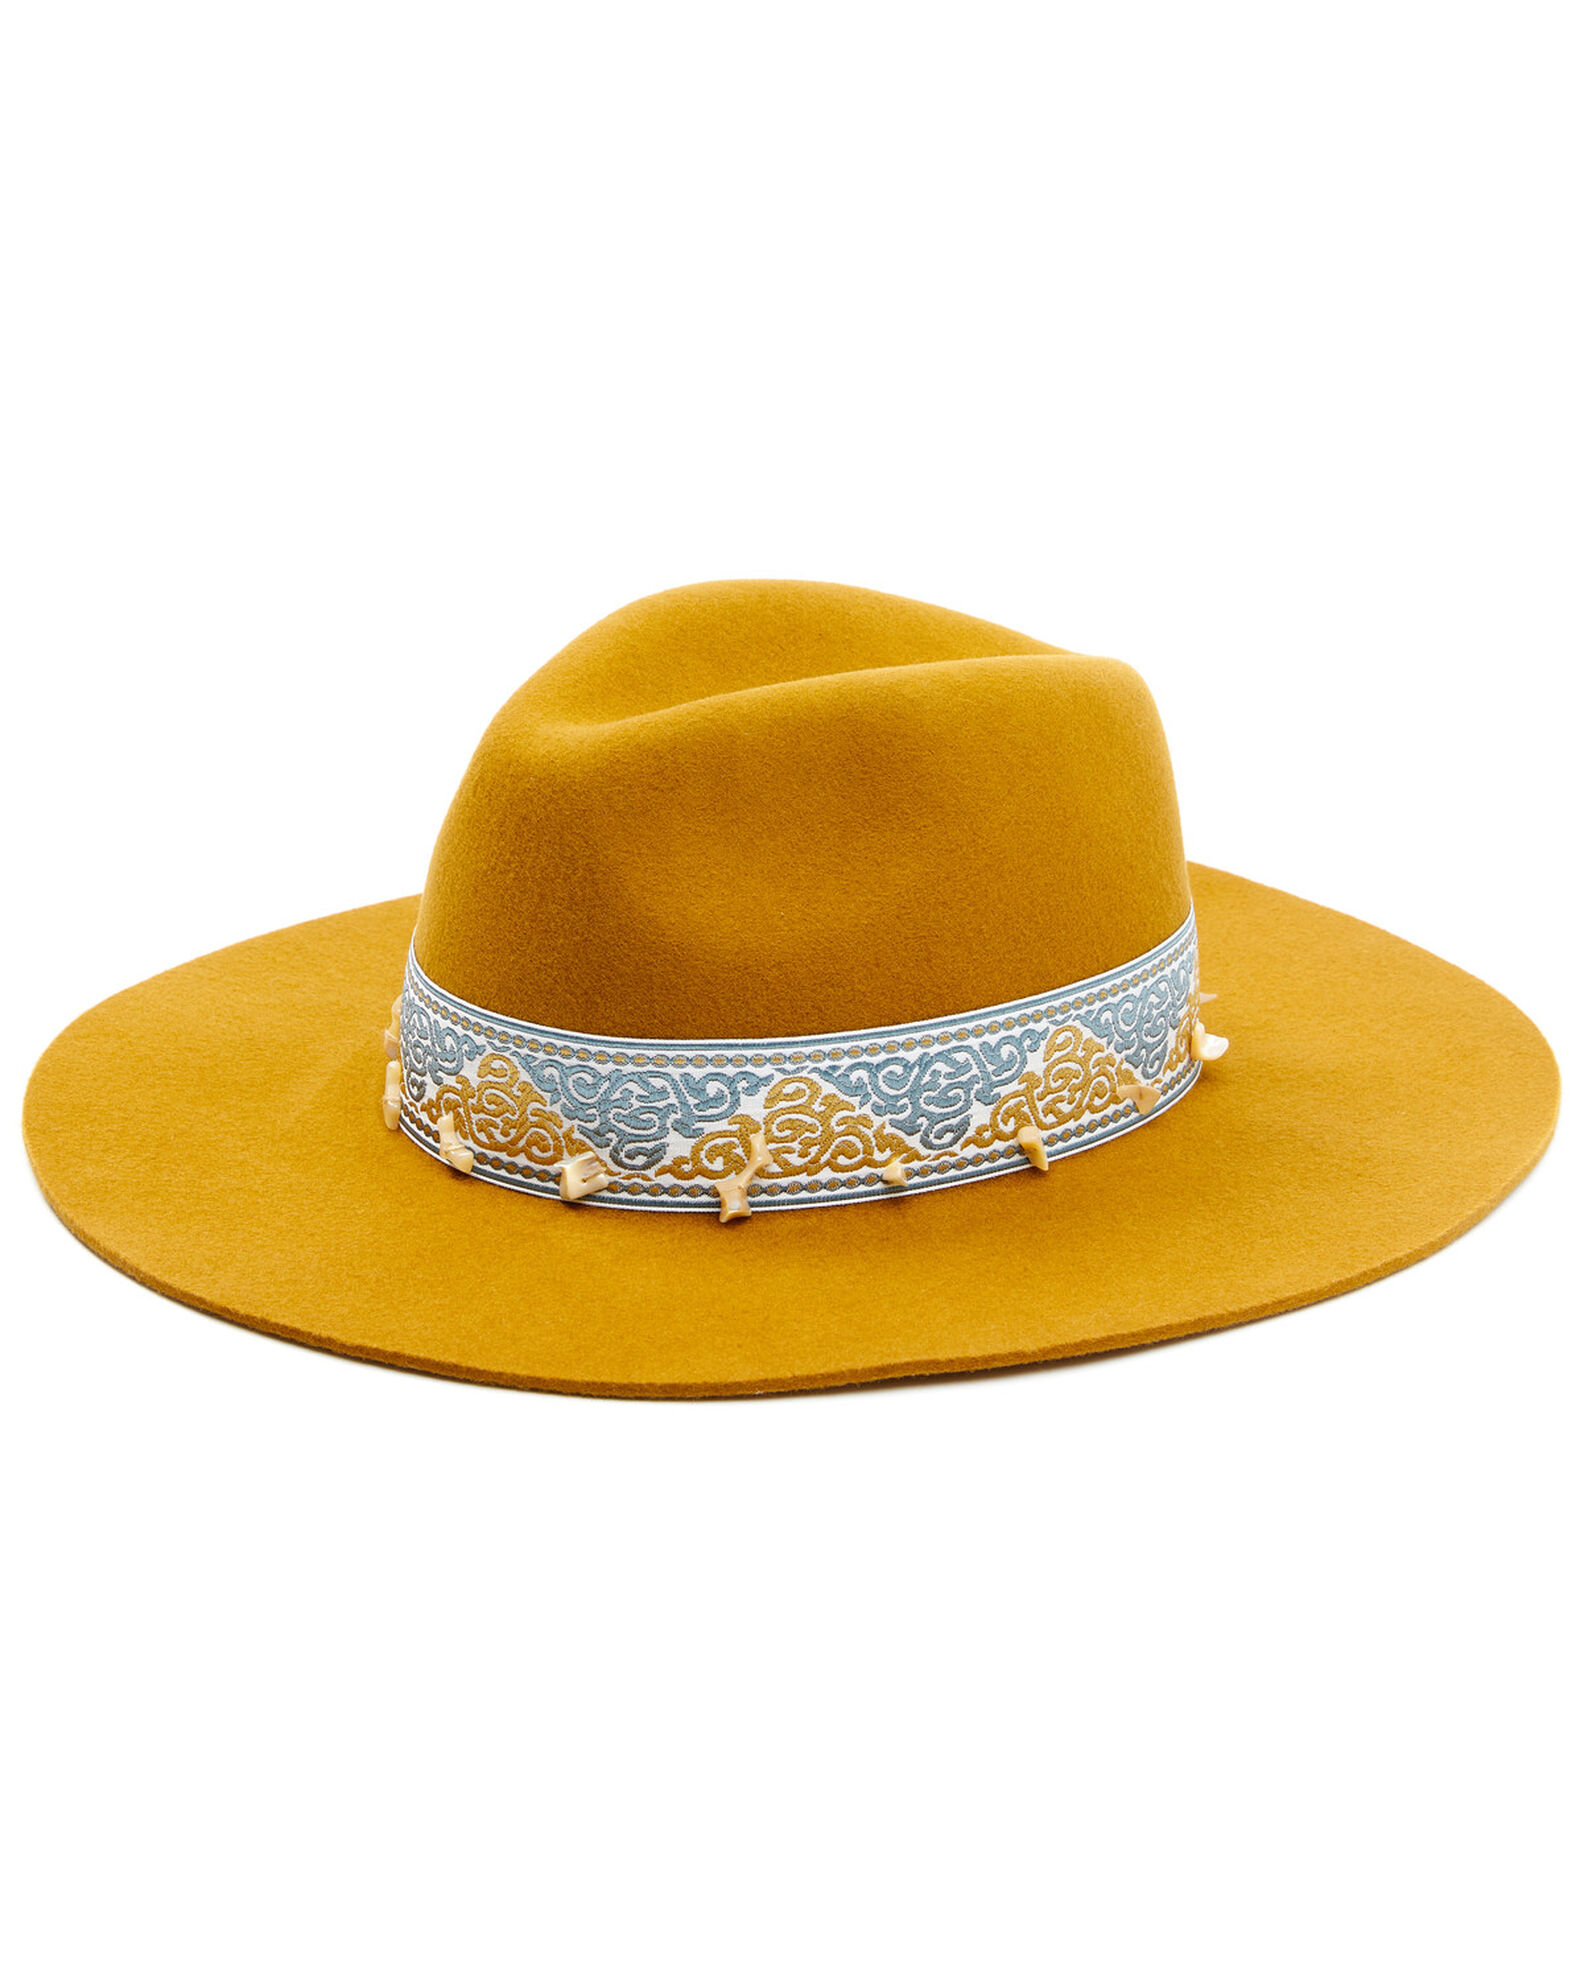 Product Name: Shyanne Women's Spaced Felt Western Fashion Hat